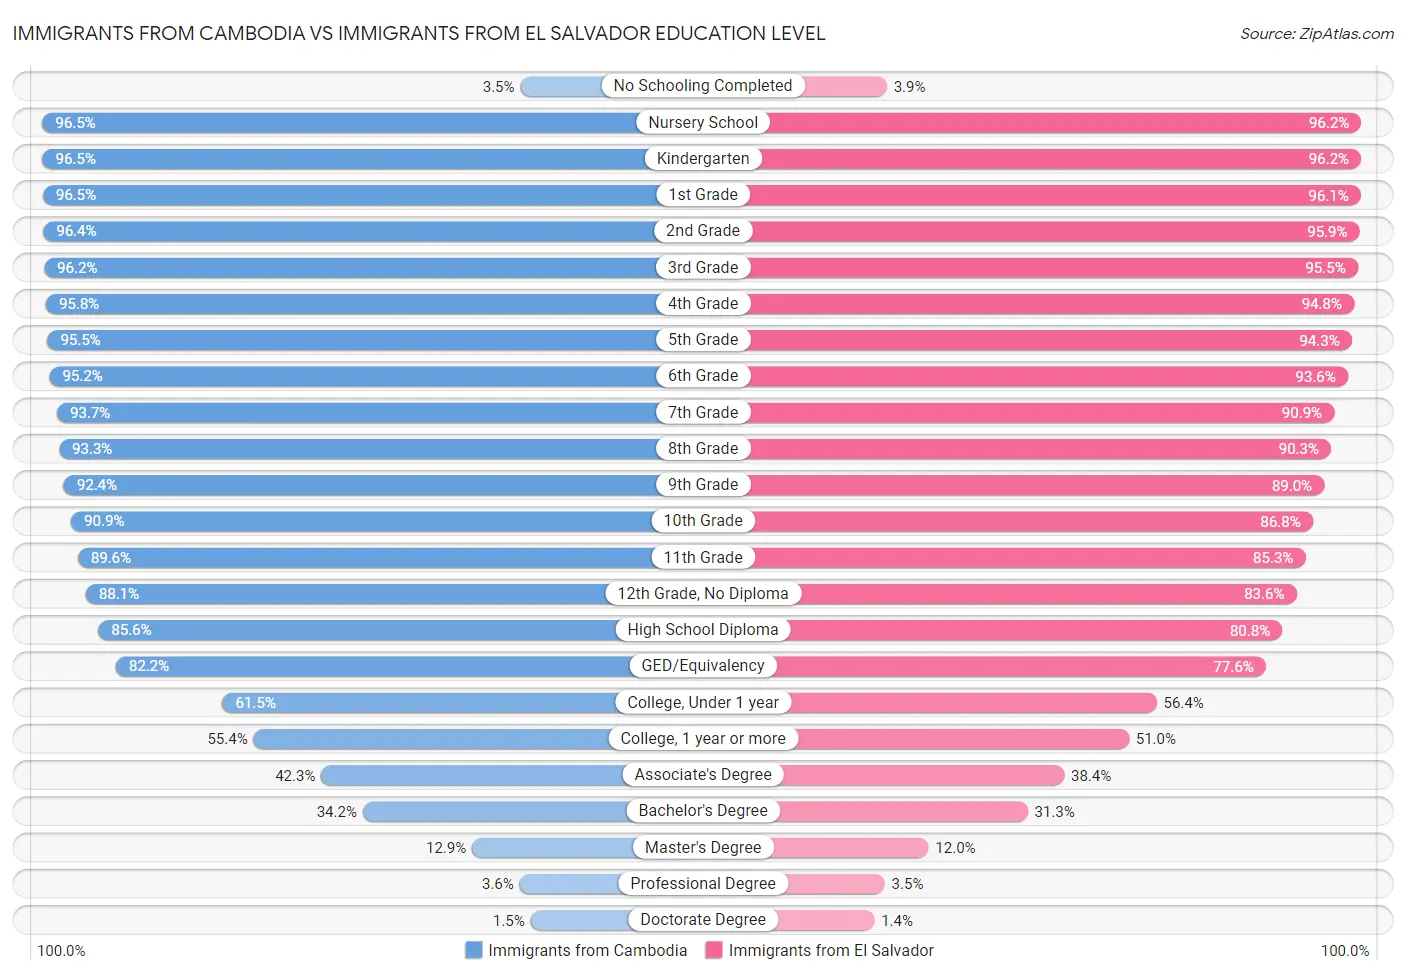 Immigrants from Cambodia vs Immigrants from El Salvador Education Level